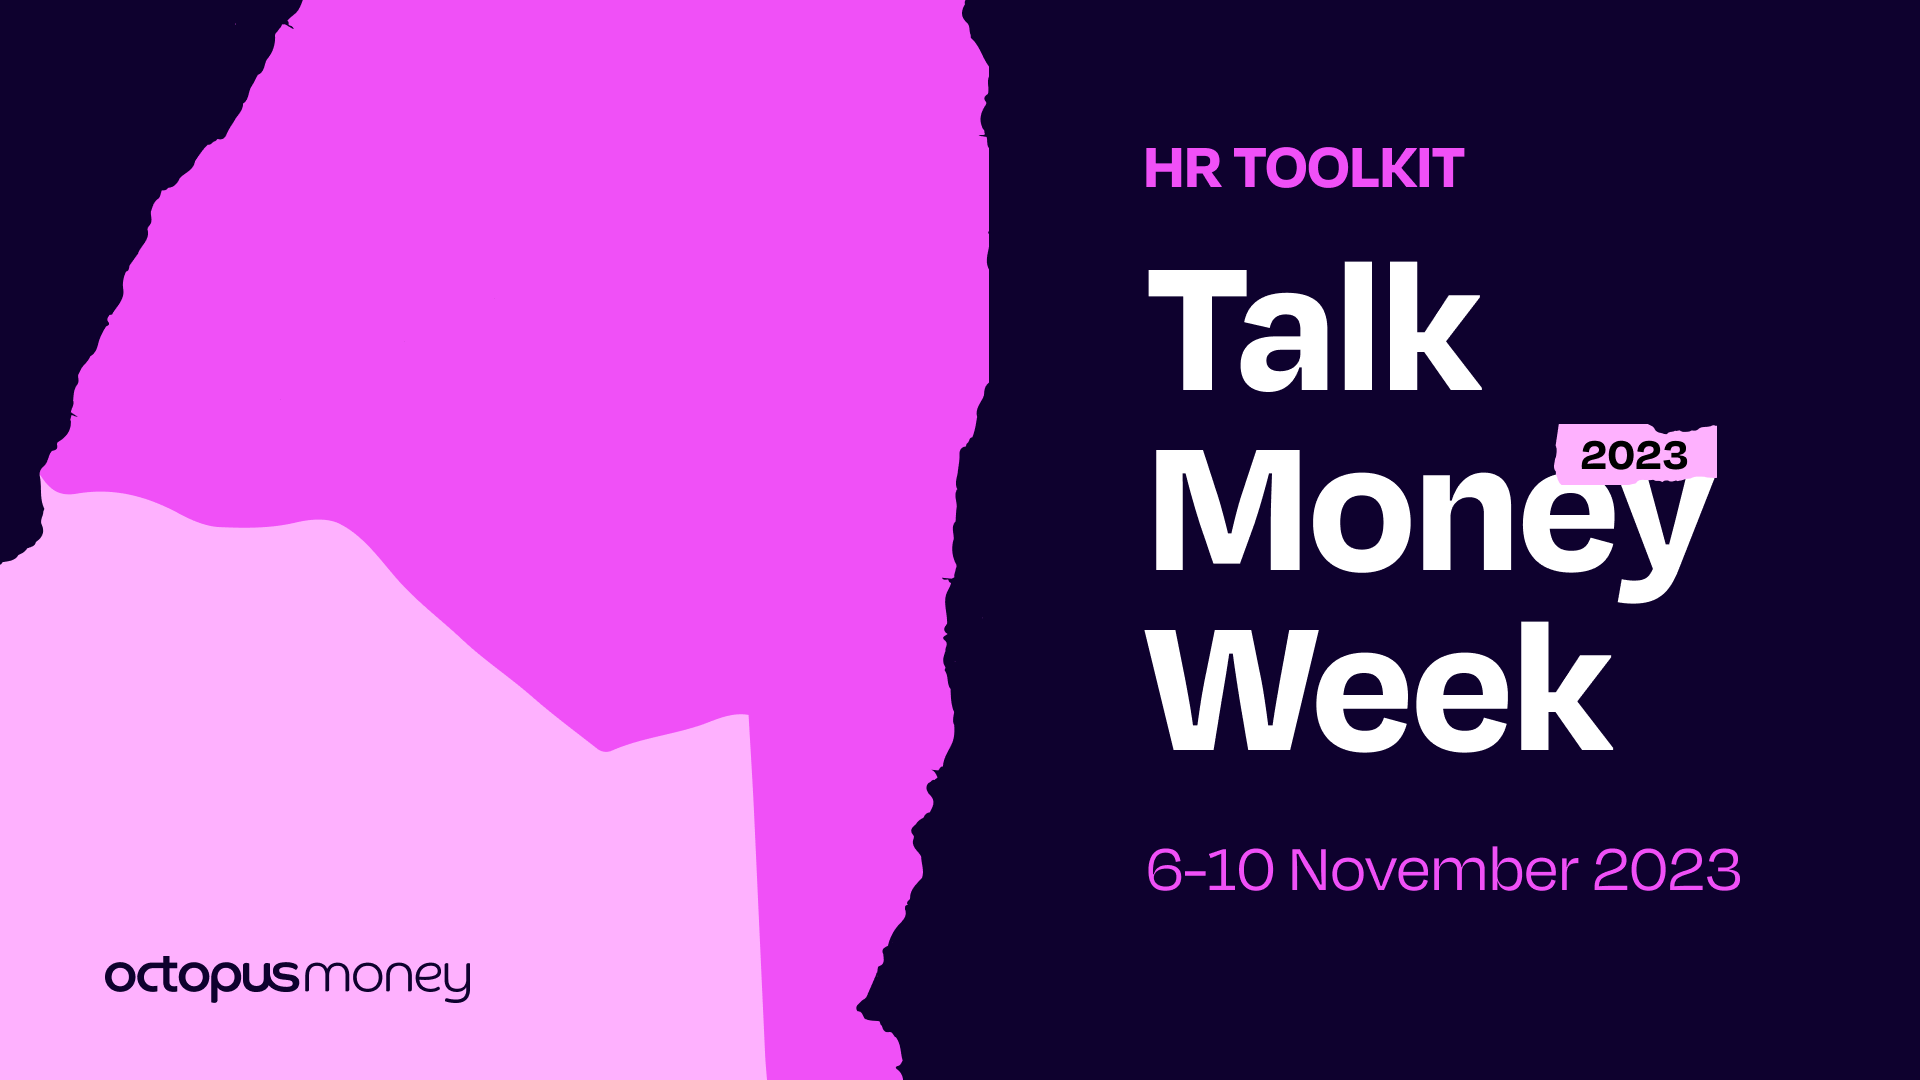 Talk Money Week 2023 Toolkit